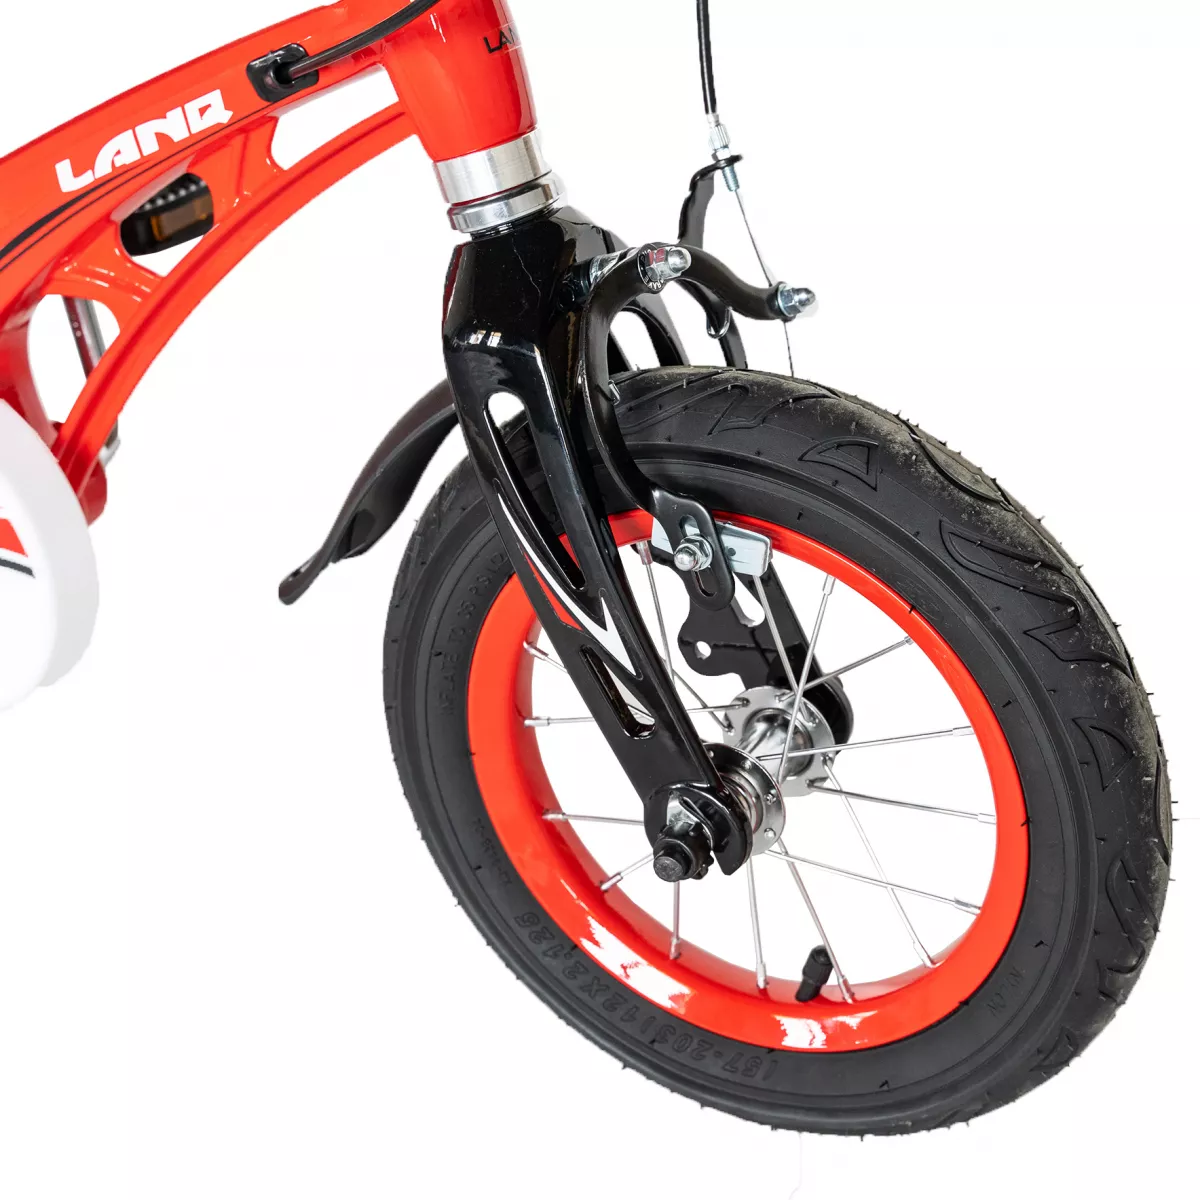 Bicicleta copii W1246D, roata 12", cadru aliaj magneziu, frana C-Brake, roti ajutatoare, 2-4 ani, rosu/negru